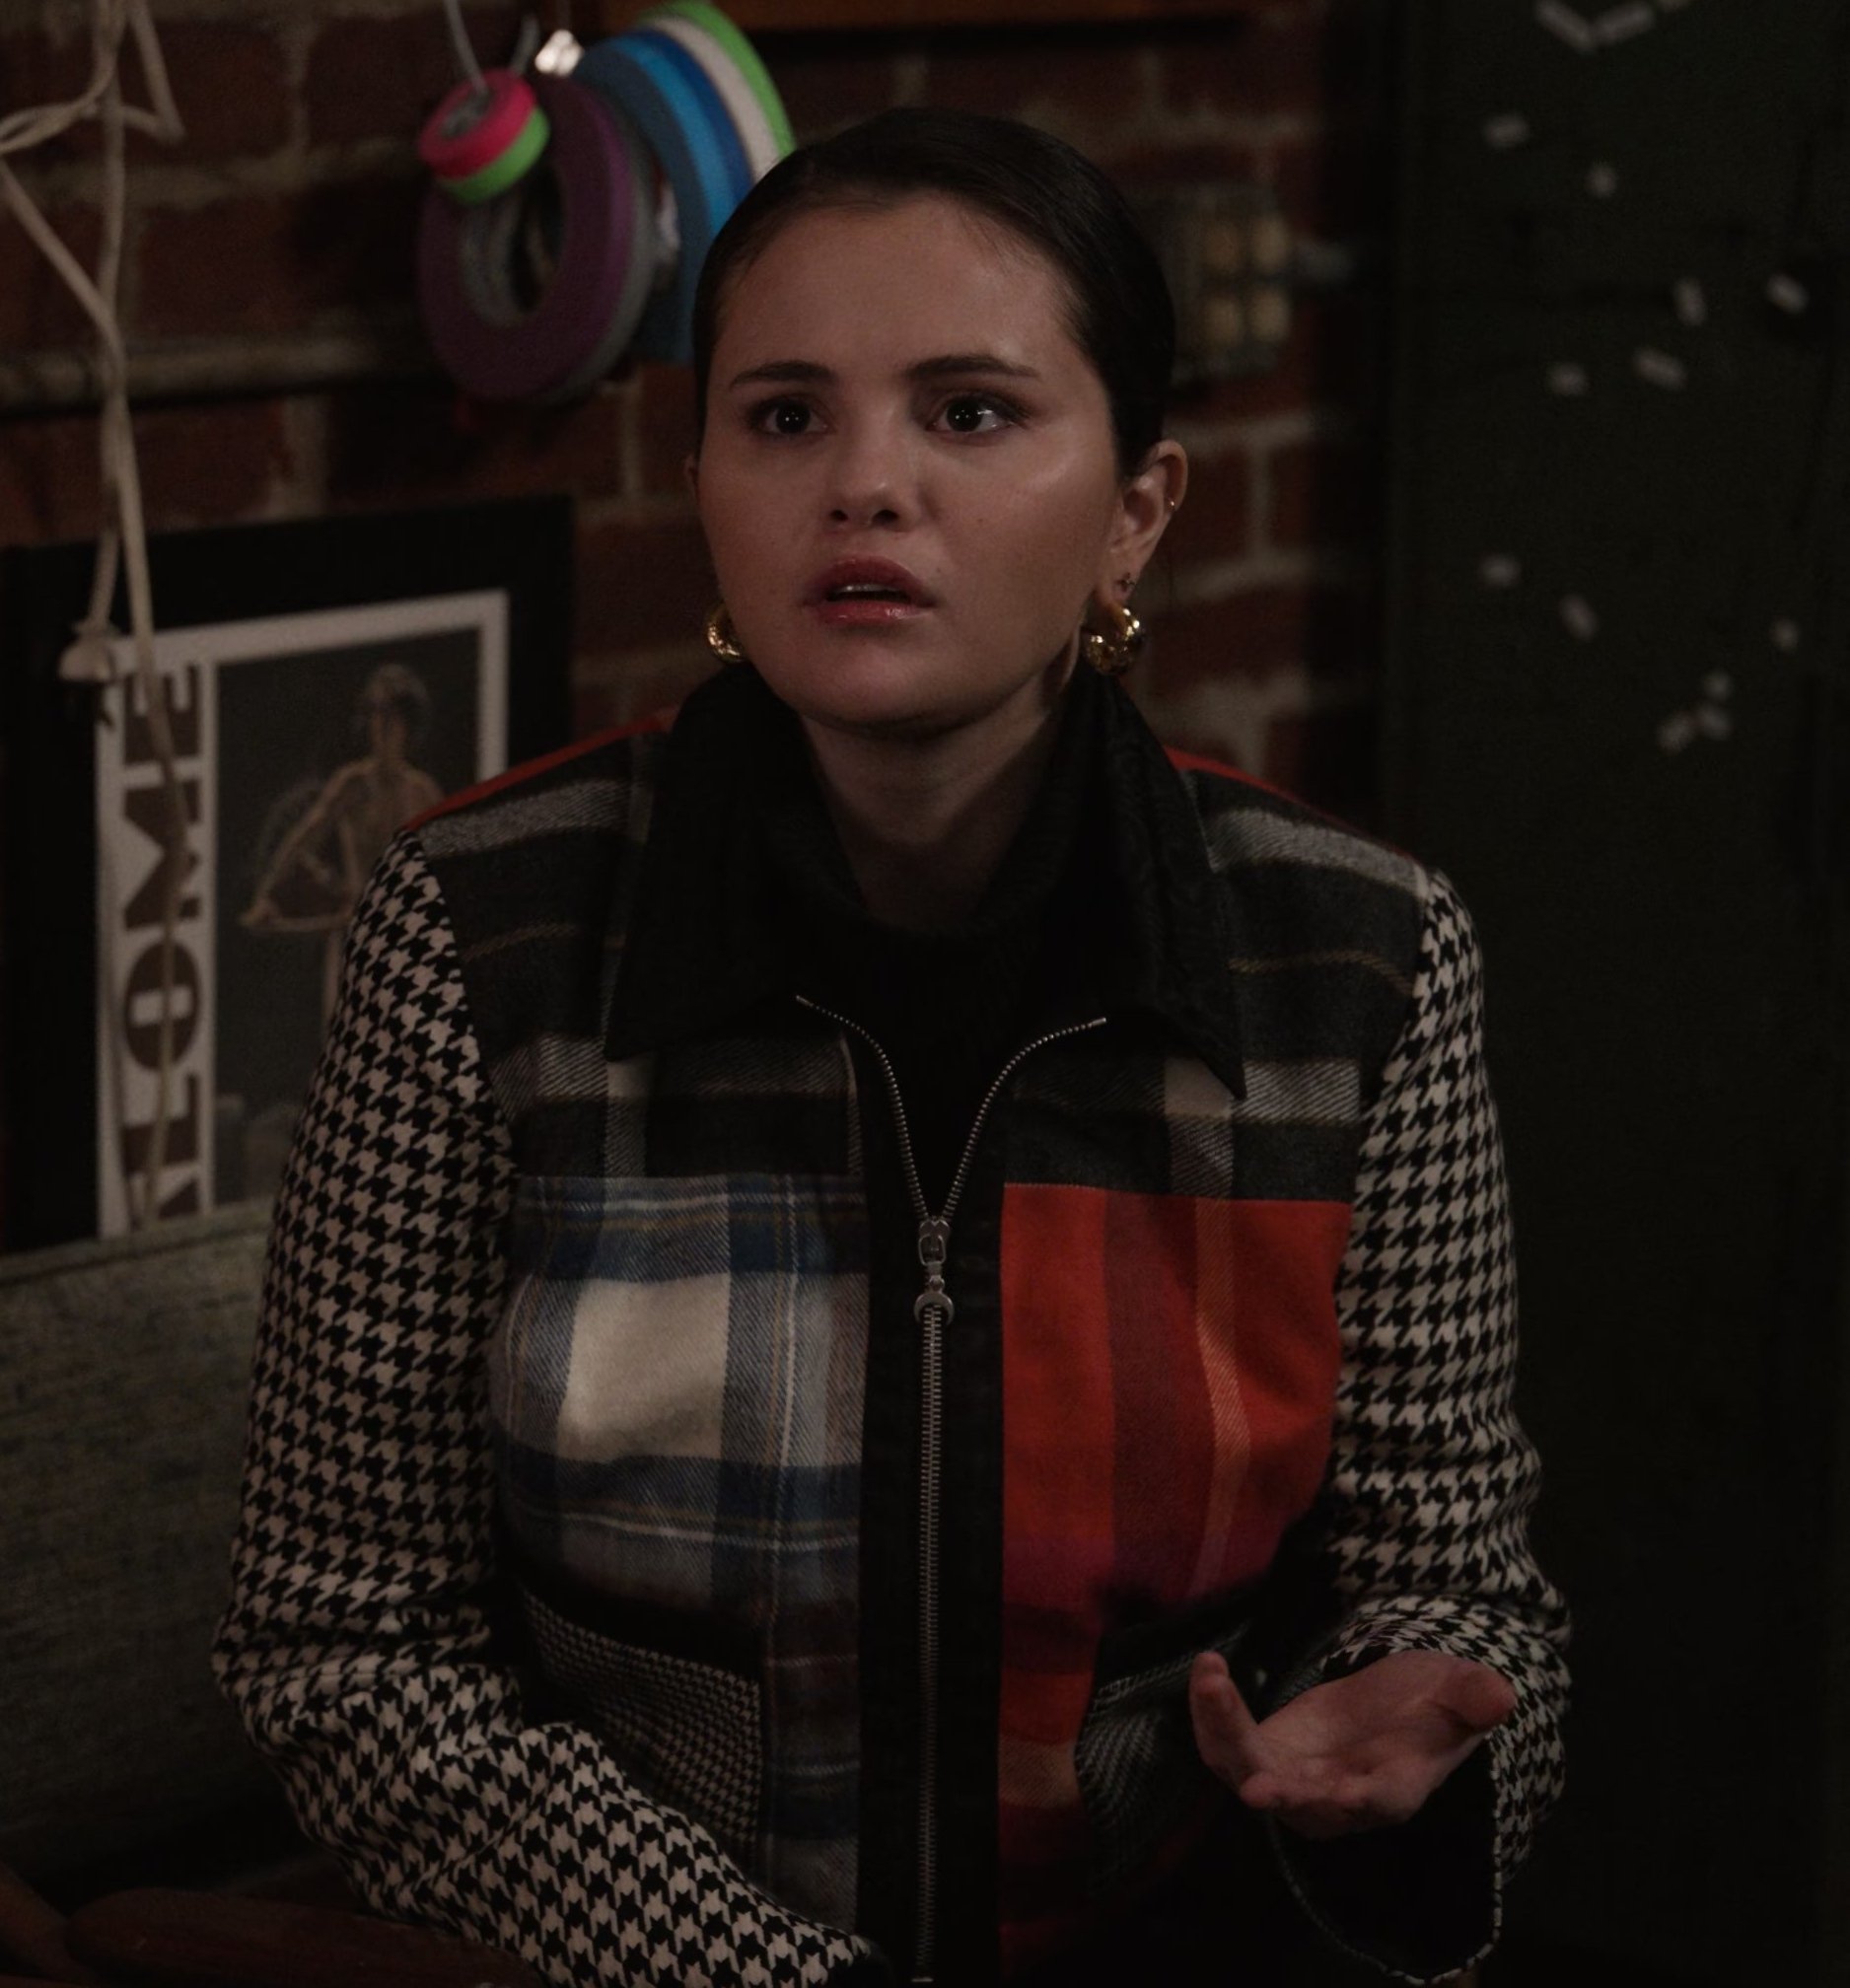 Worn on Only Murders in the Building TV Show - Tartan Pattern Wool Jacket Worn by Selena Gomez as Mabel Mora